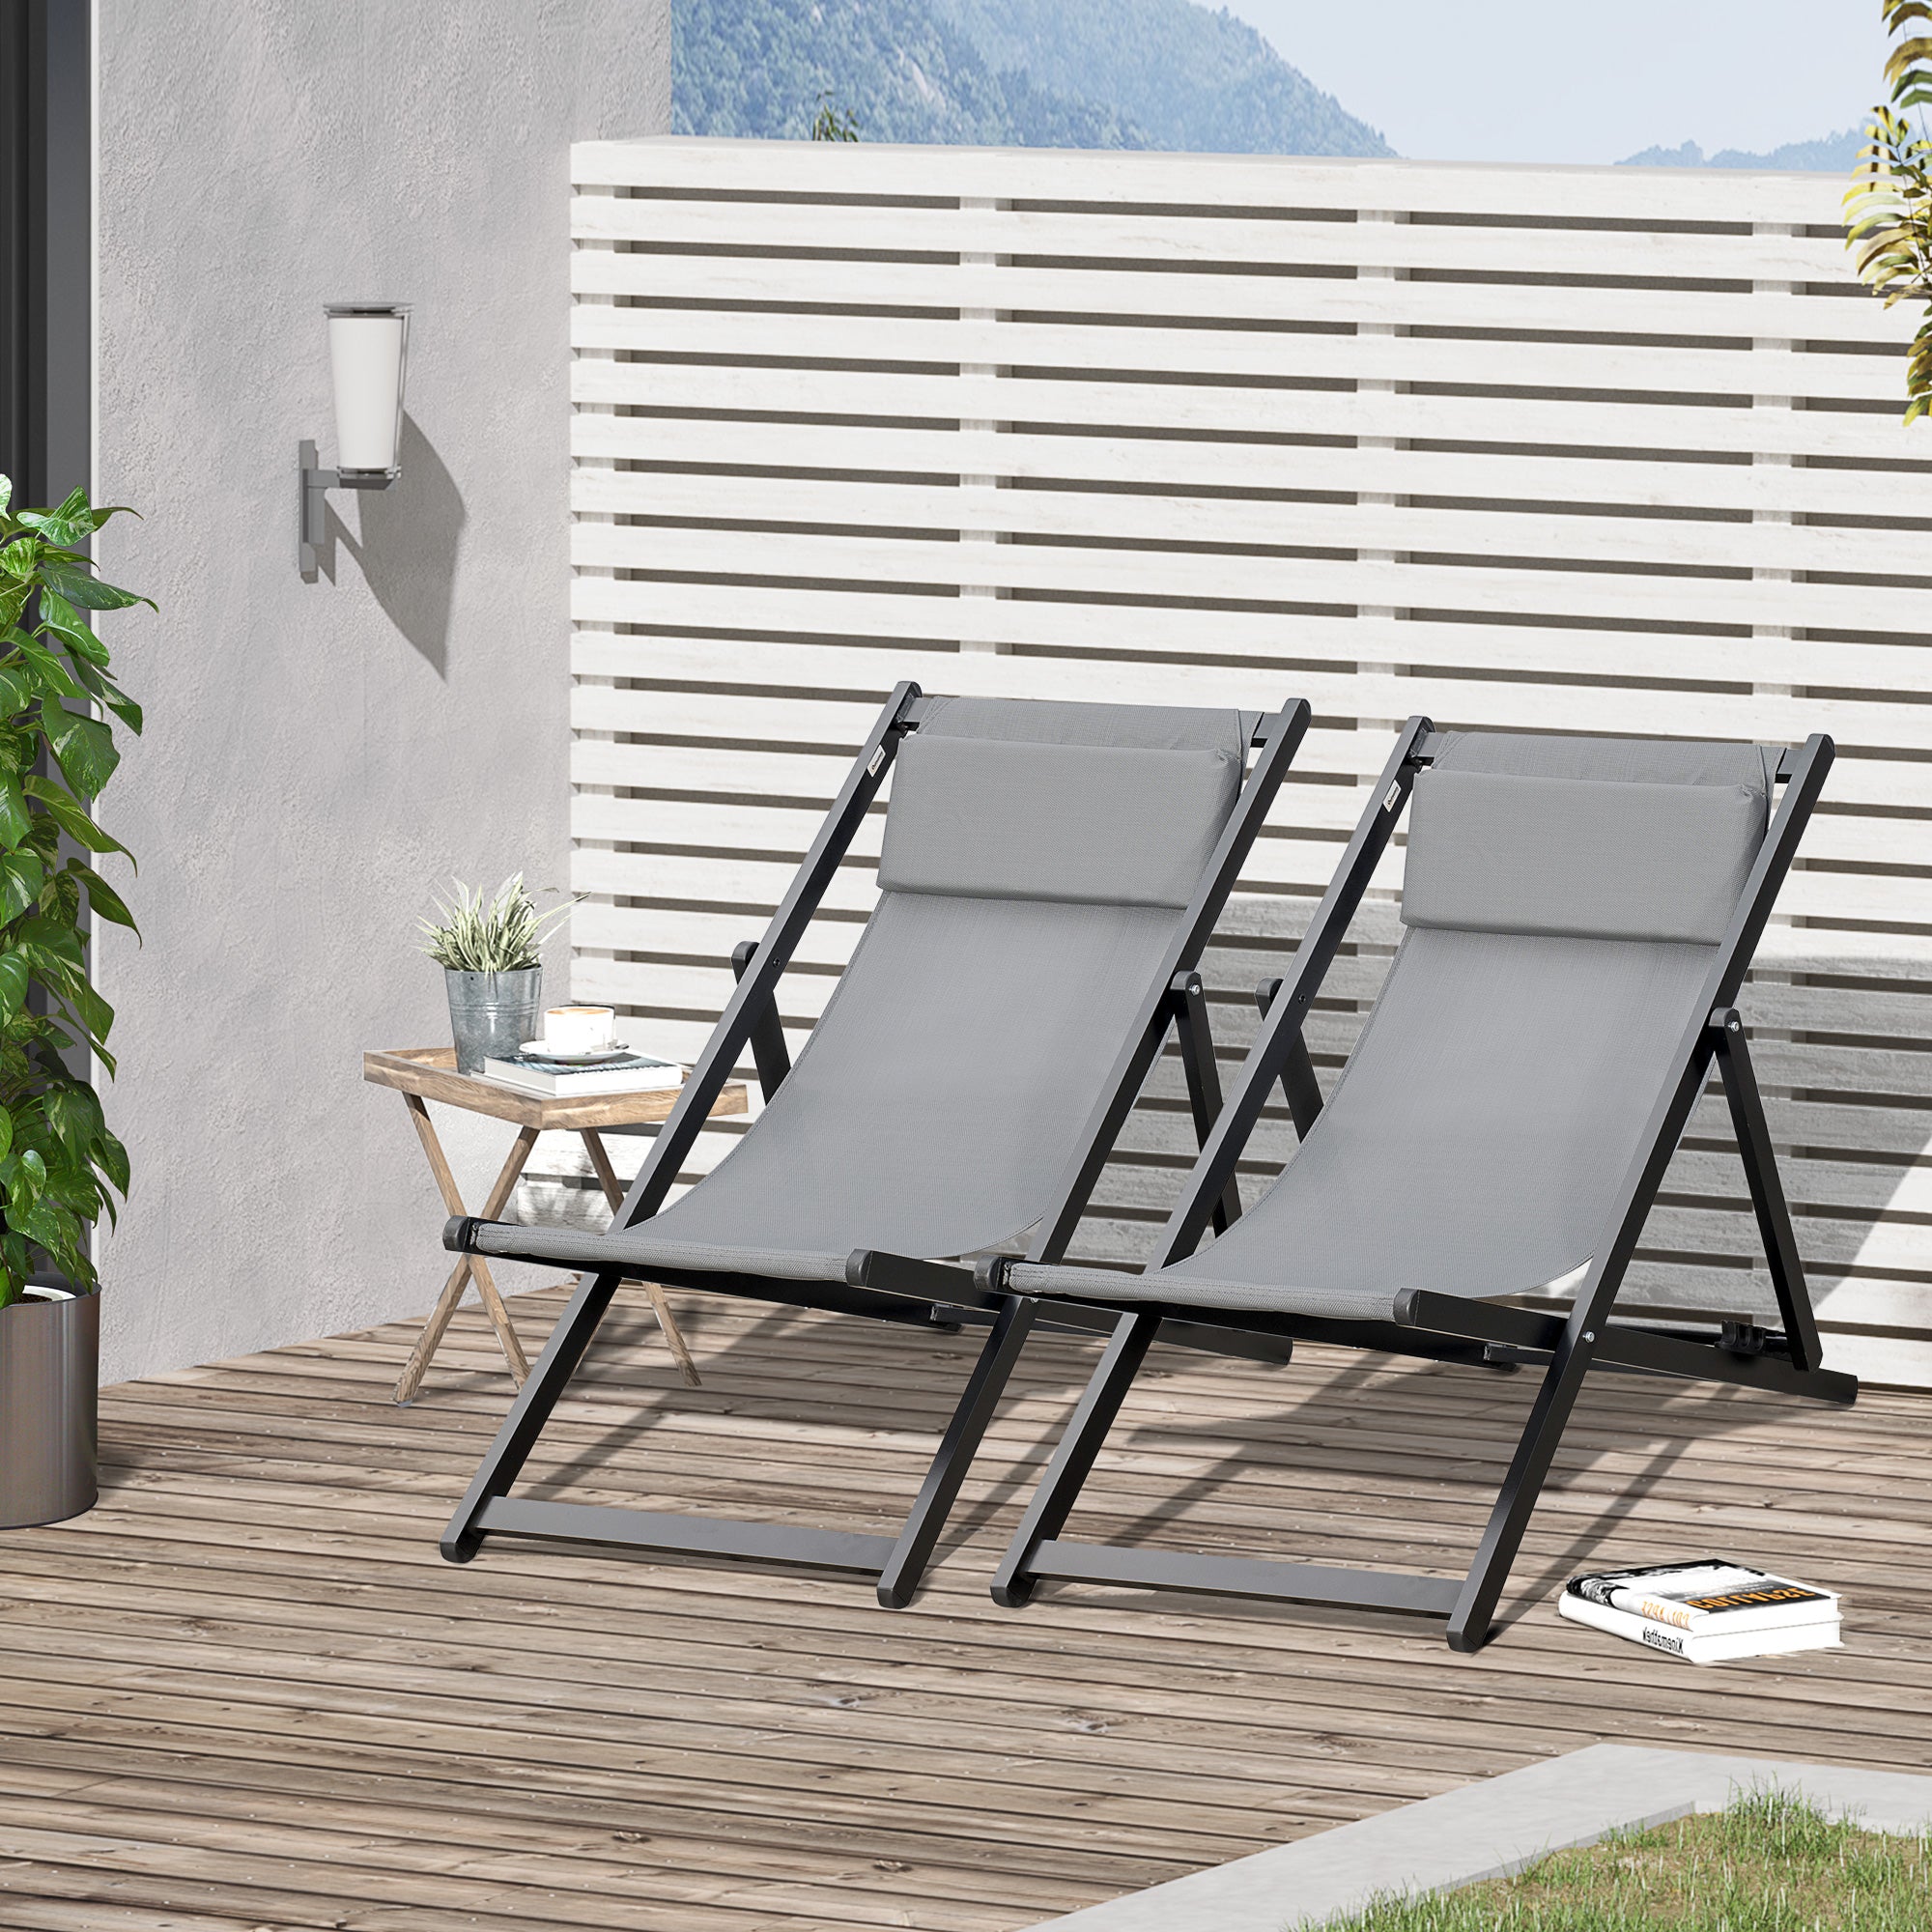 Wholesale Aluminum Folding Chair Outdoor Portable Backrest Beach